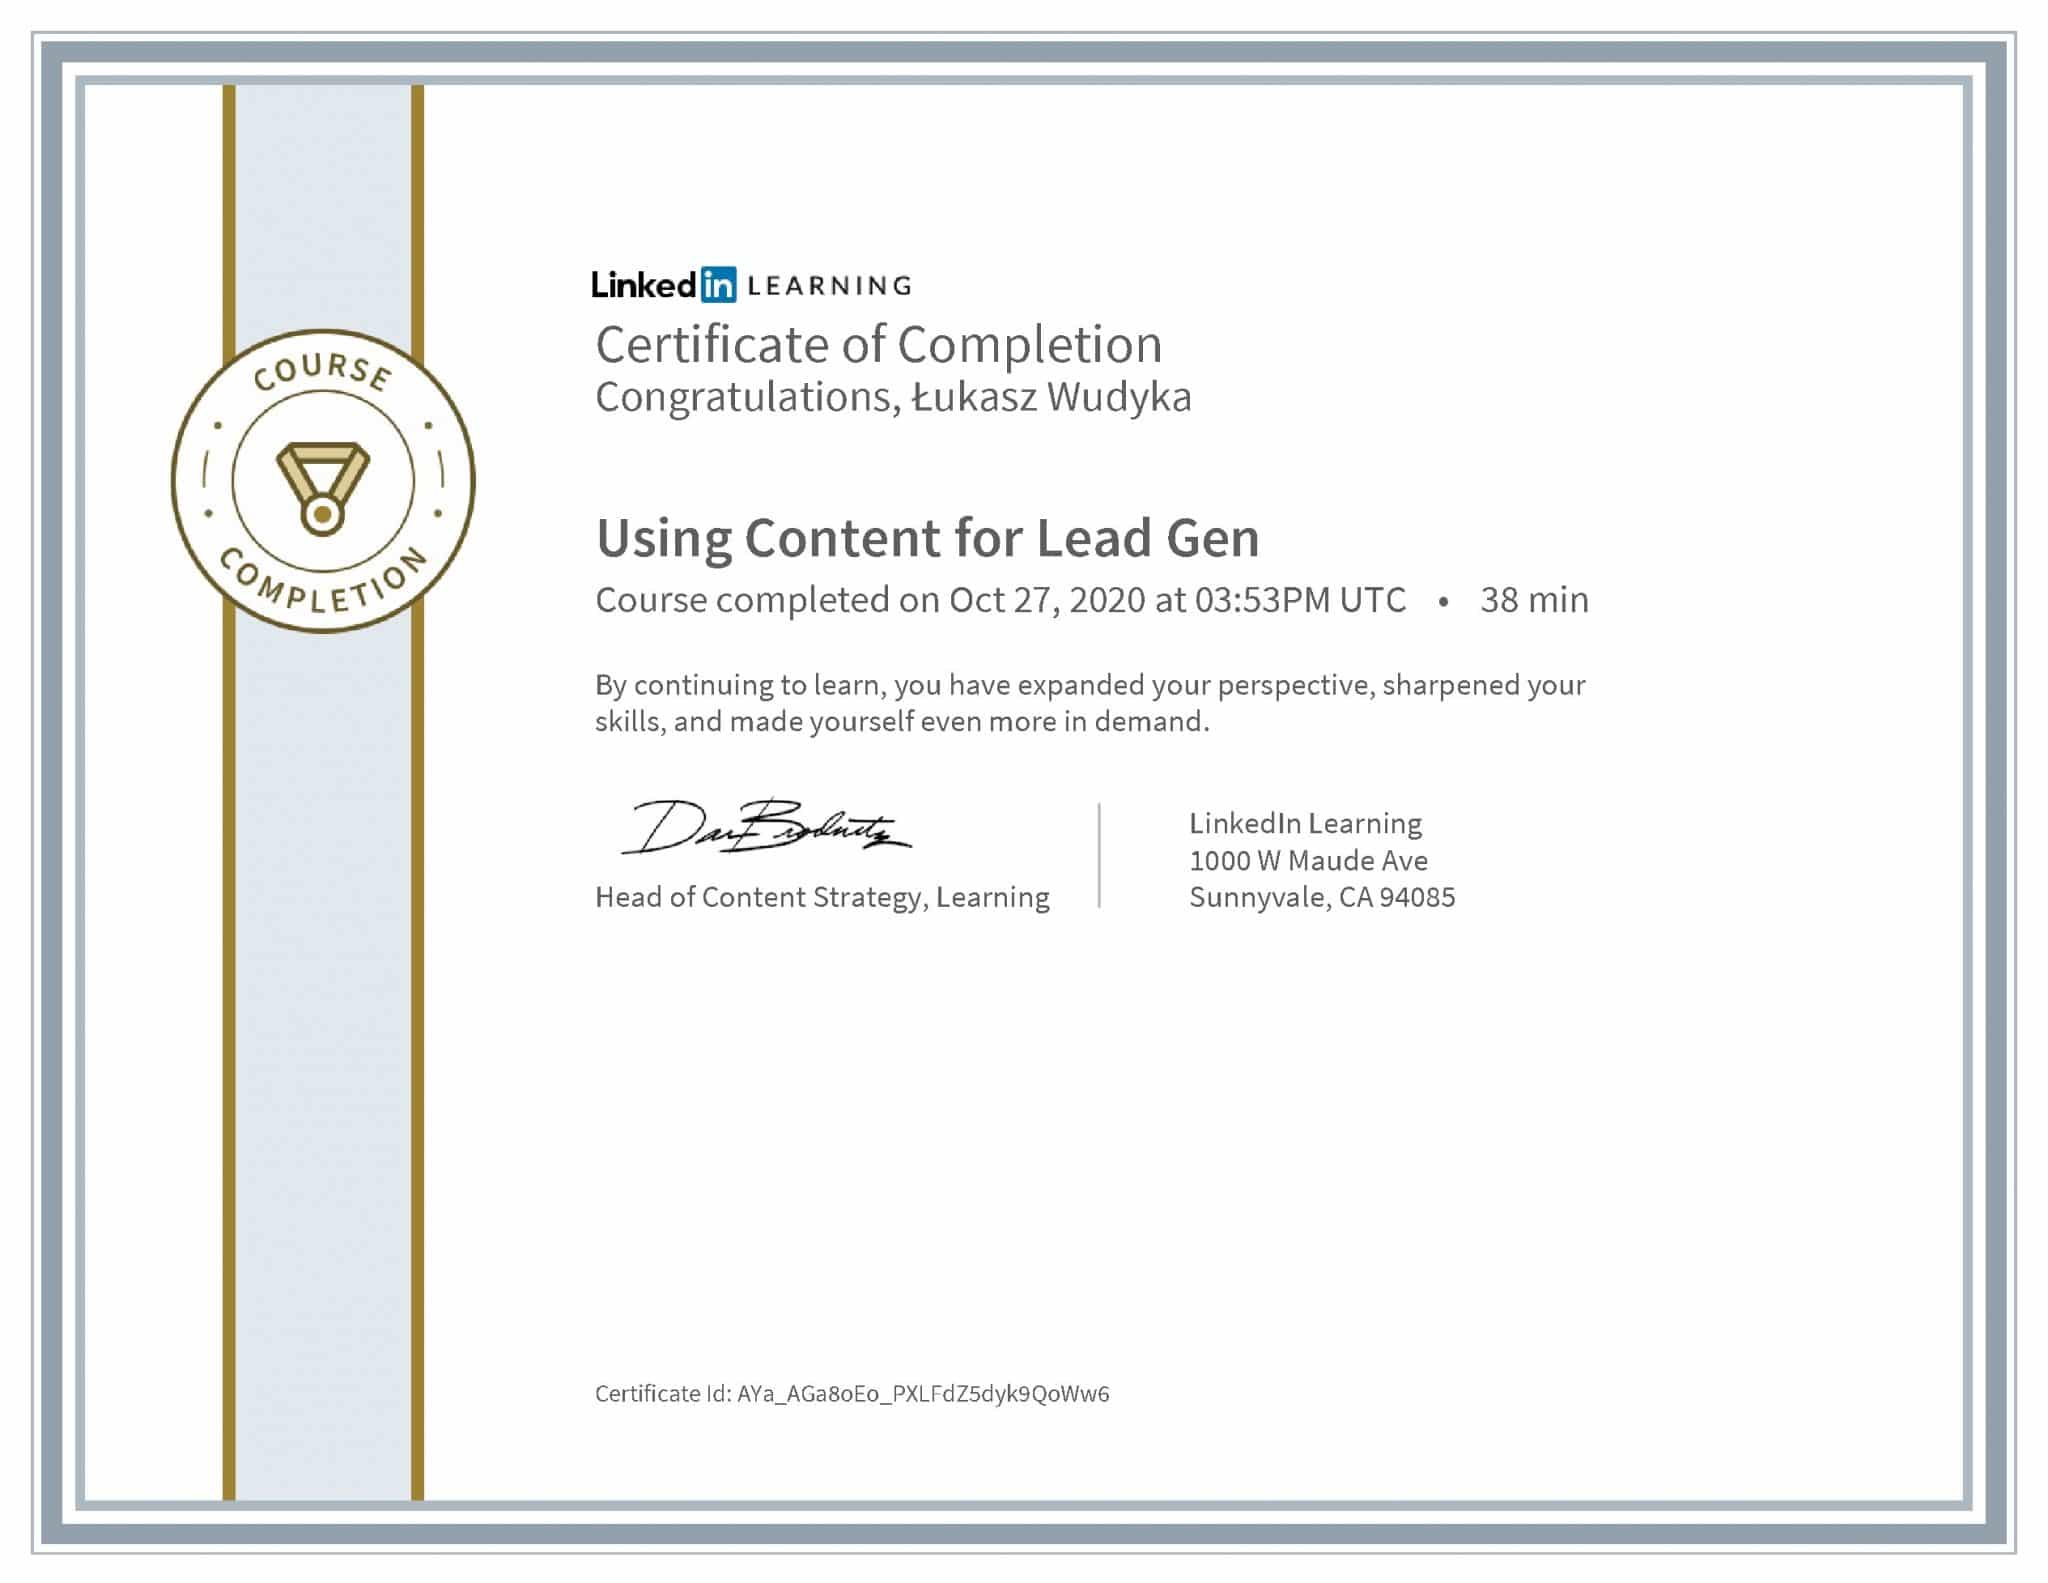 Łukasz Wudyka certyfikat LinkedIn Using Content for Lead Gen